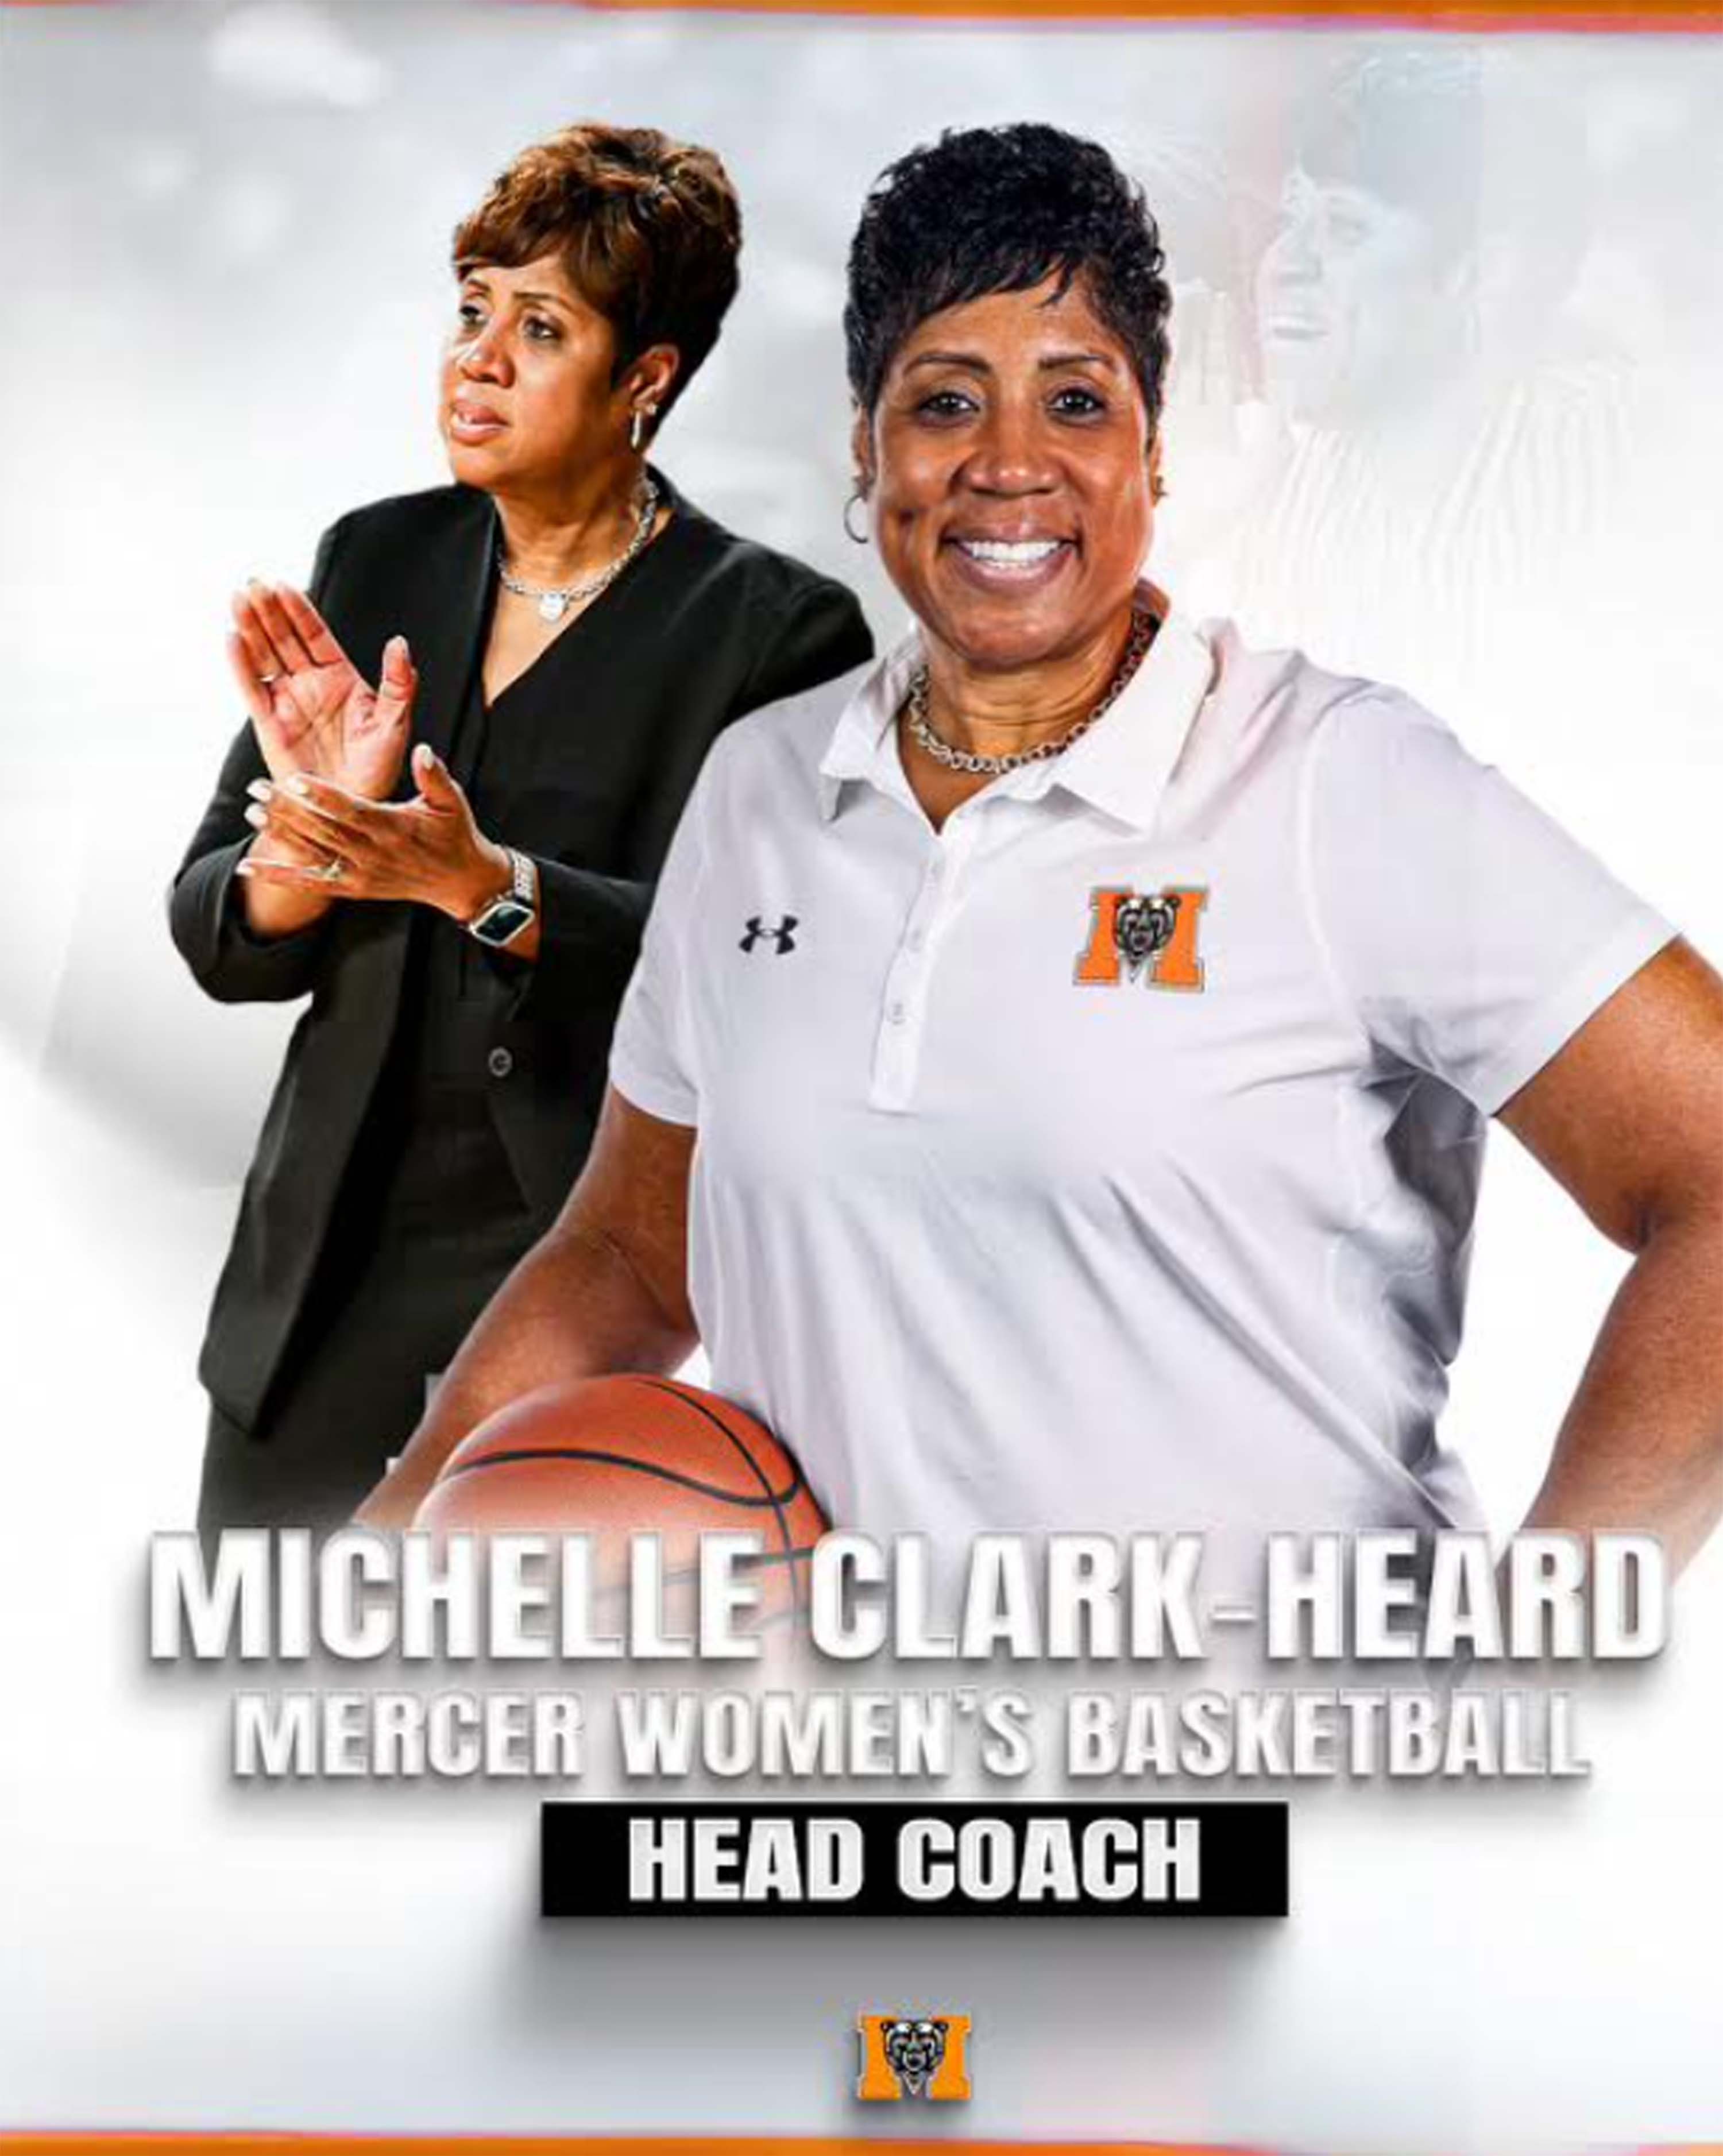 Mercer University Hires New Coach For Women’s Basketball Team post thumbnail